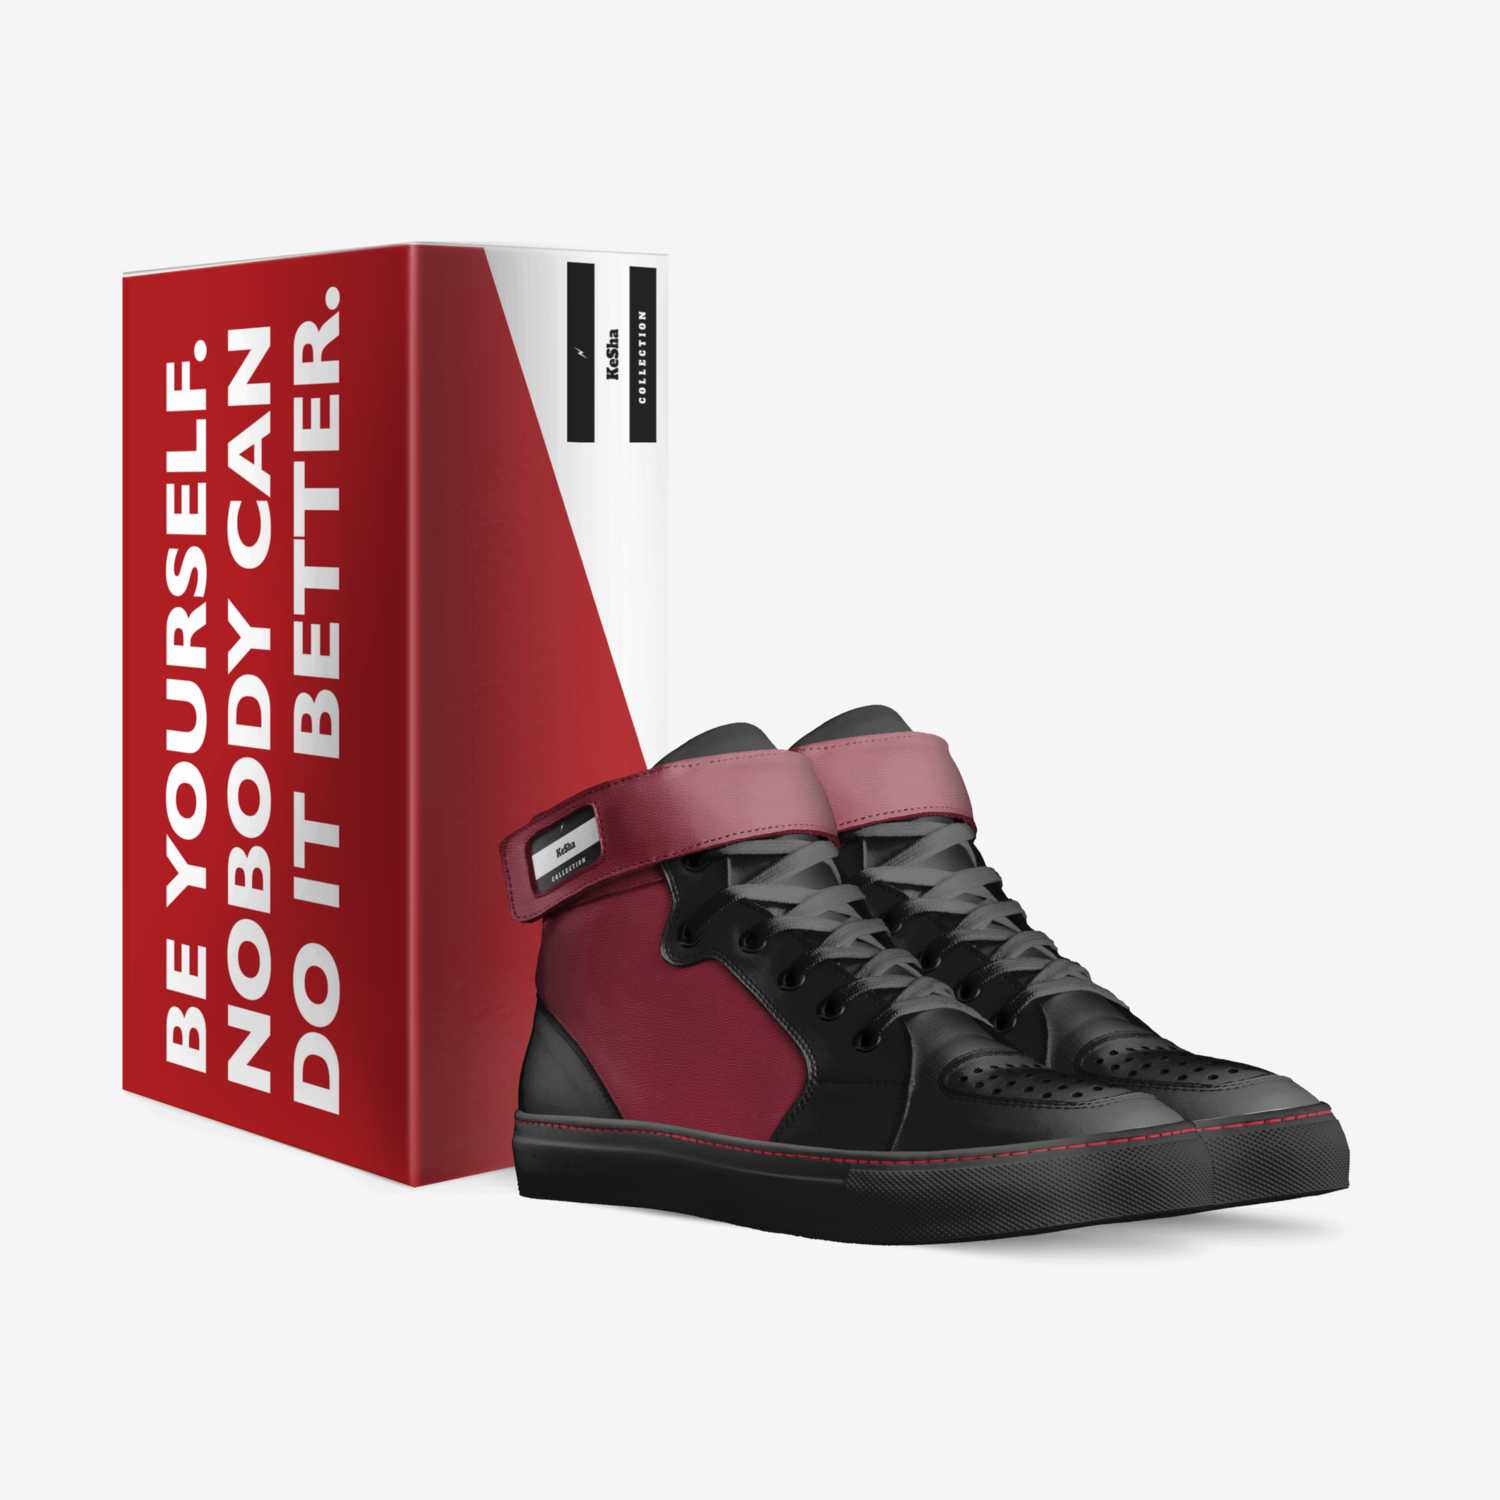 KeSha custom made in Italy shoes by Kingkesha | Box view